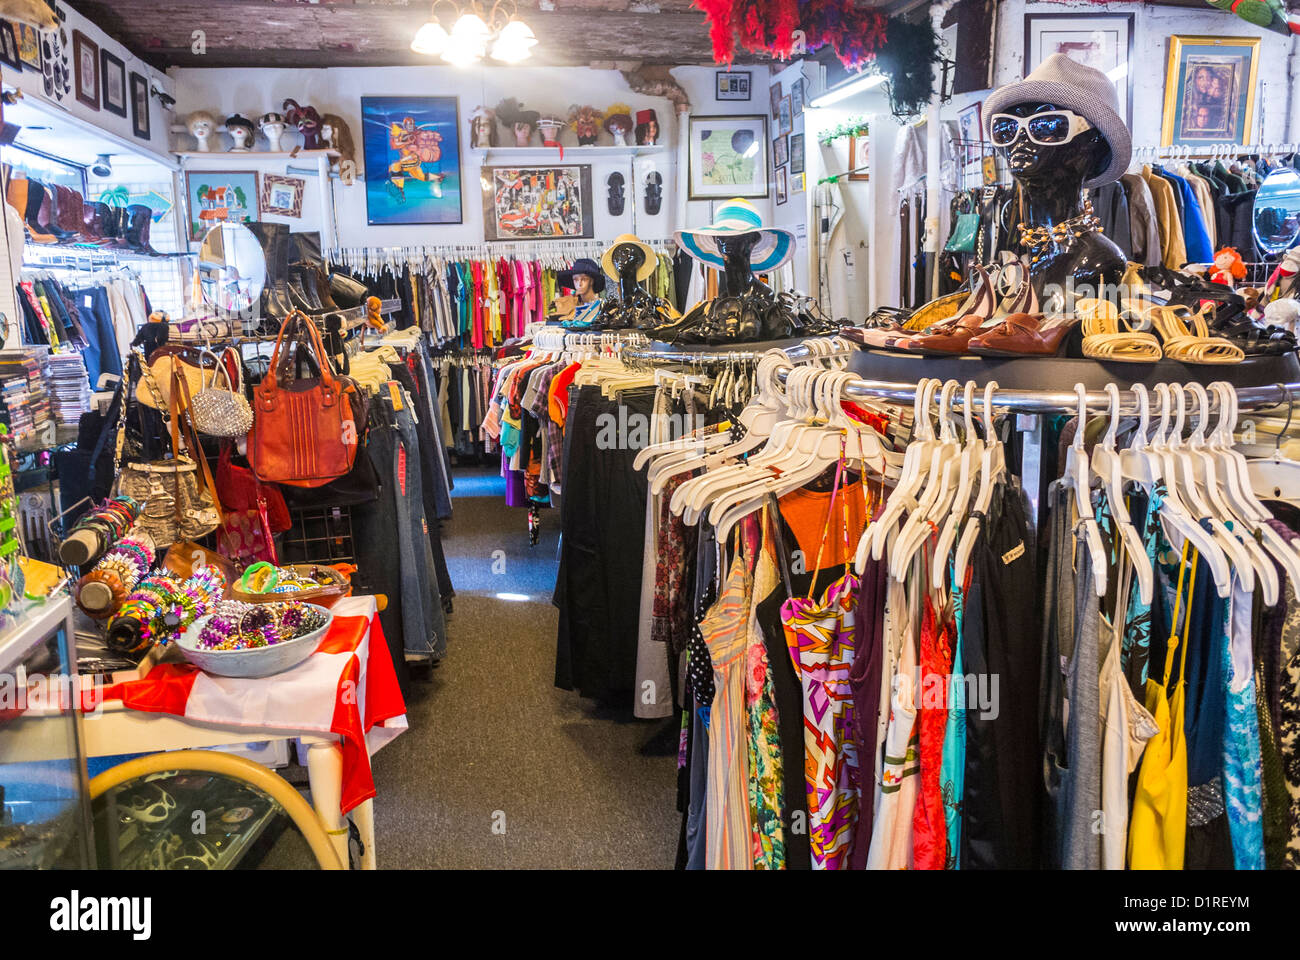 New York, NY, USA, East Village, Shopping, Vintage Old Clothing Store, Inside CLothing Racks, 'Monk Thrift Shop' clothes shopping  [USA] Stock Photo